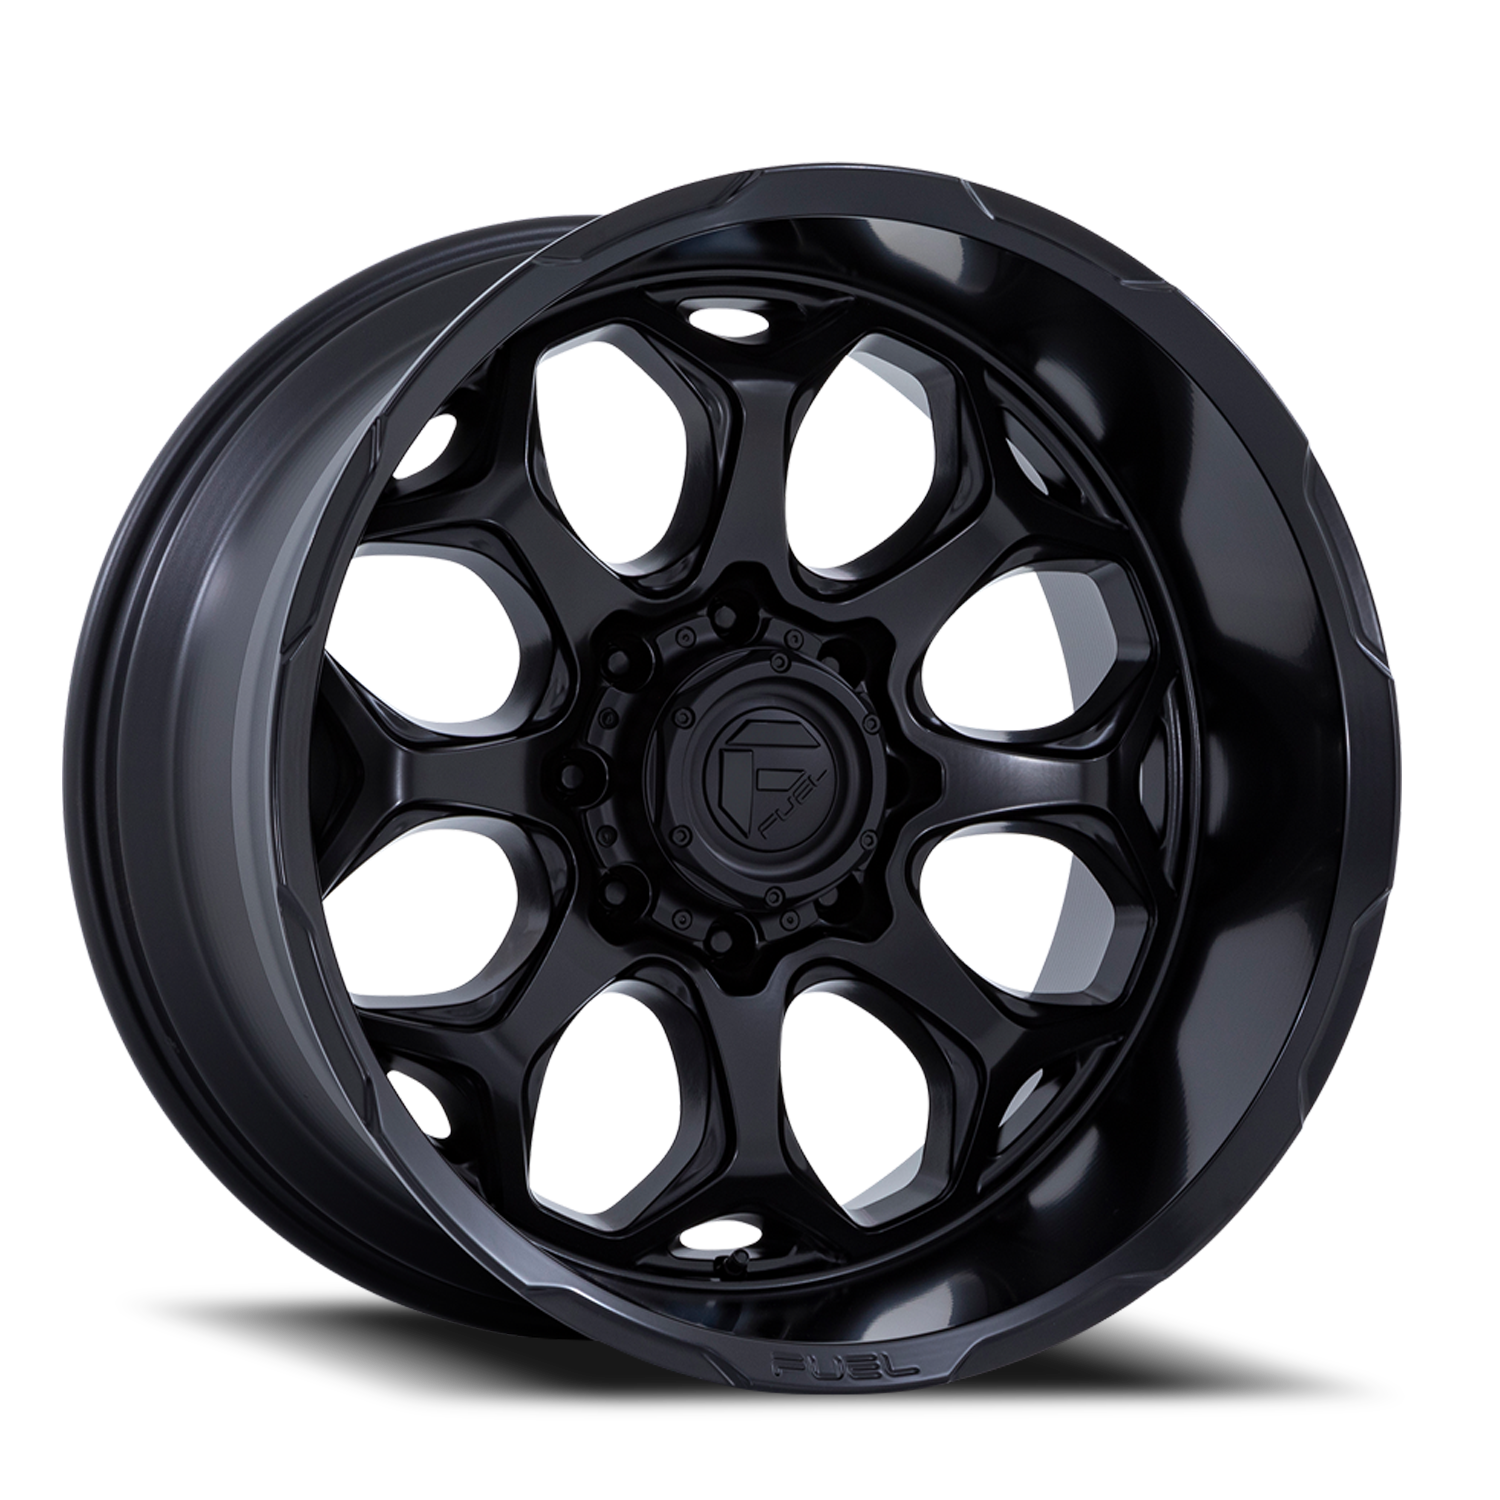 Aluminum Wheels 22X12 Scepter FC862 MX 6 On 135 Blackout 87.1 Bore -44 Offset Fuel Off Road Wheels